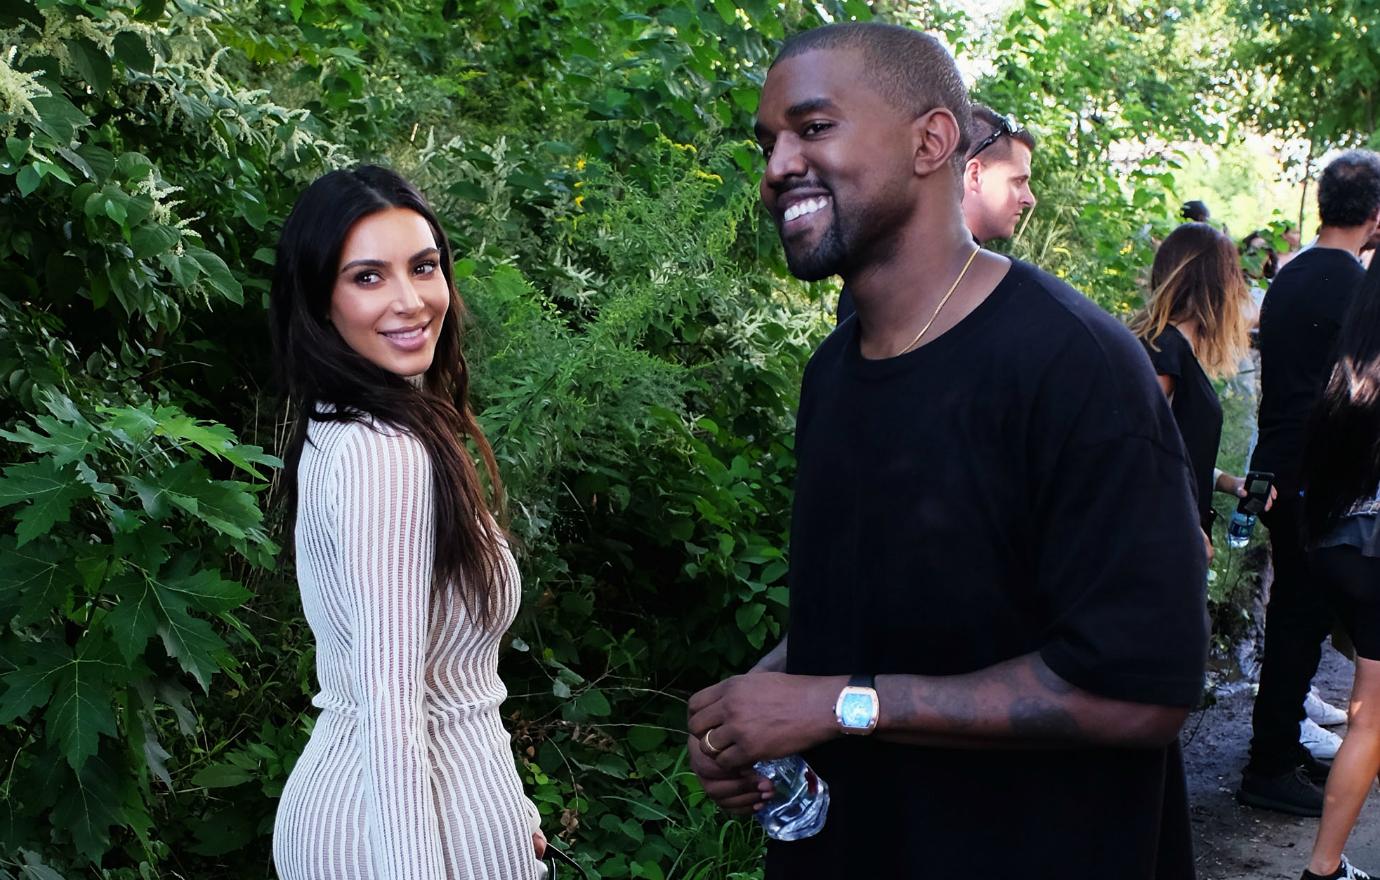 Kris Jenner Beyond Bursting With Happiness for Kim & Kanye